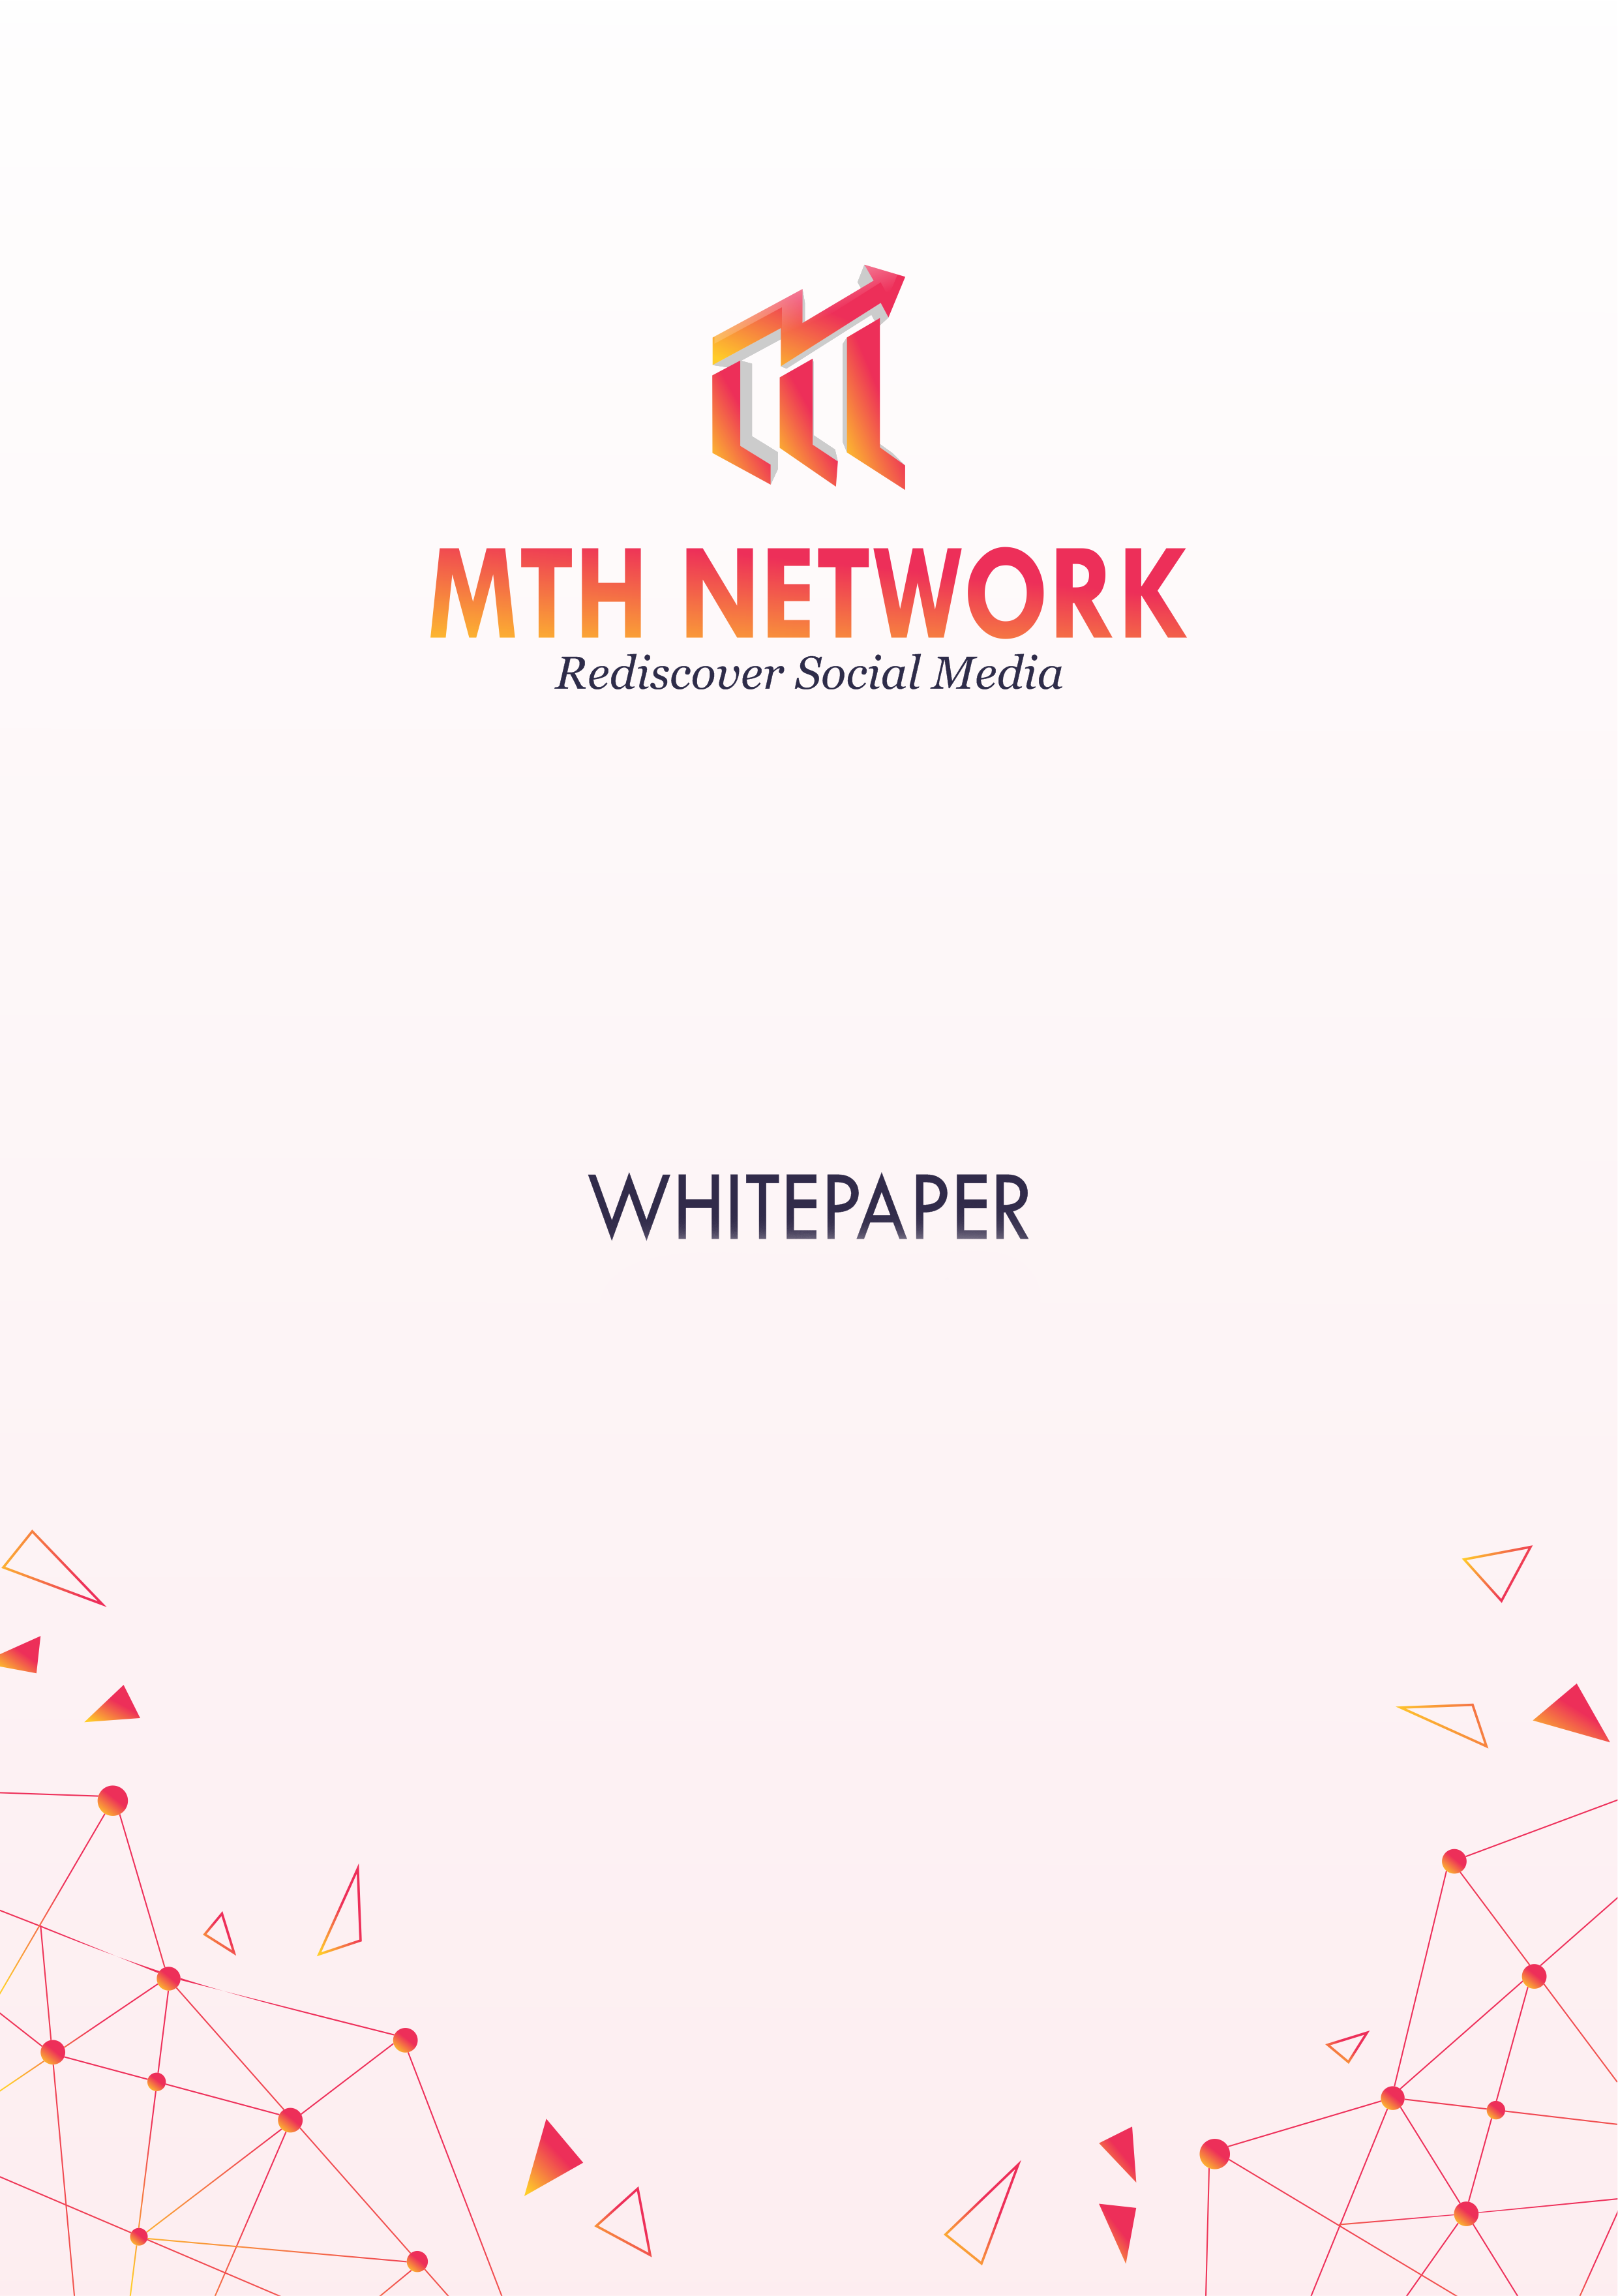 mth network